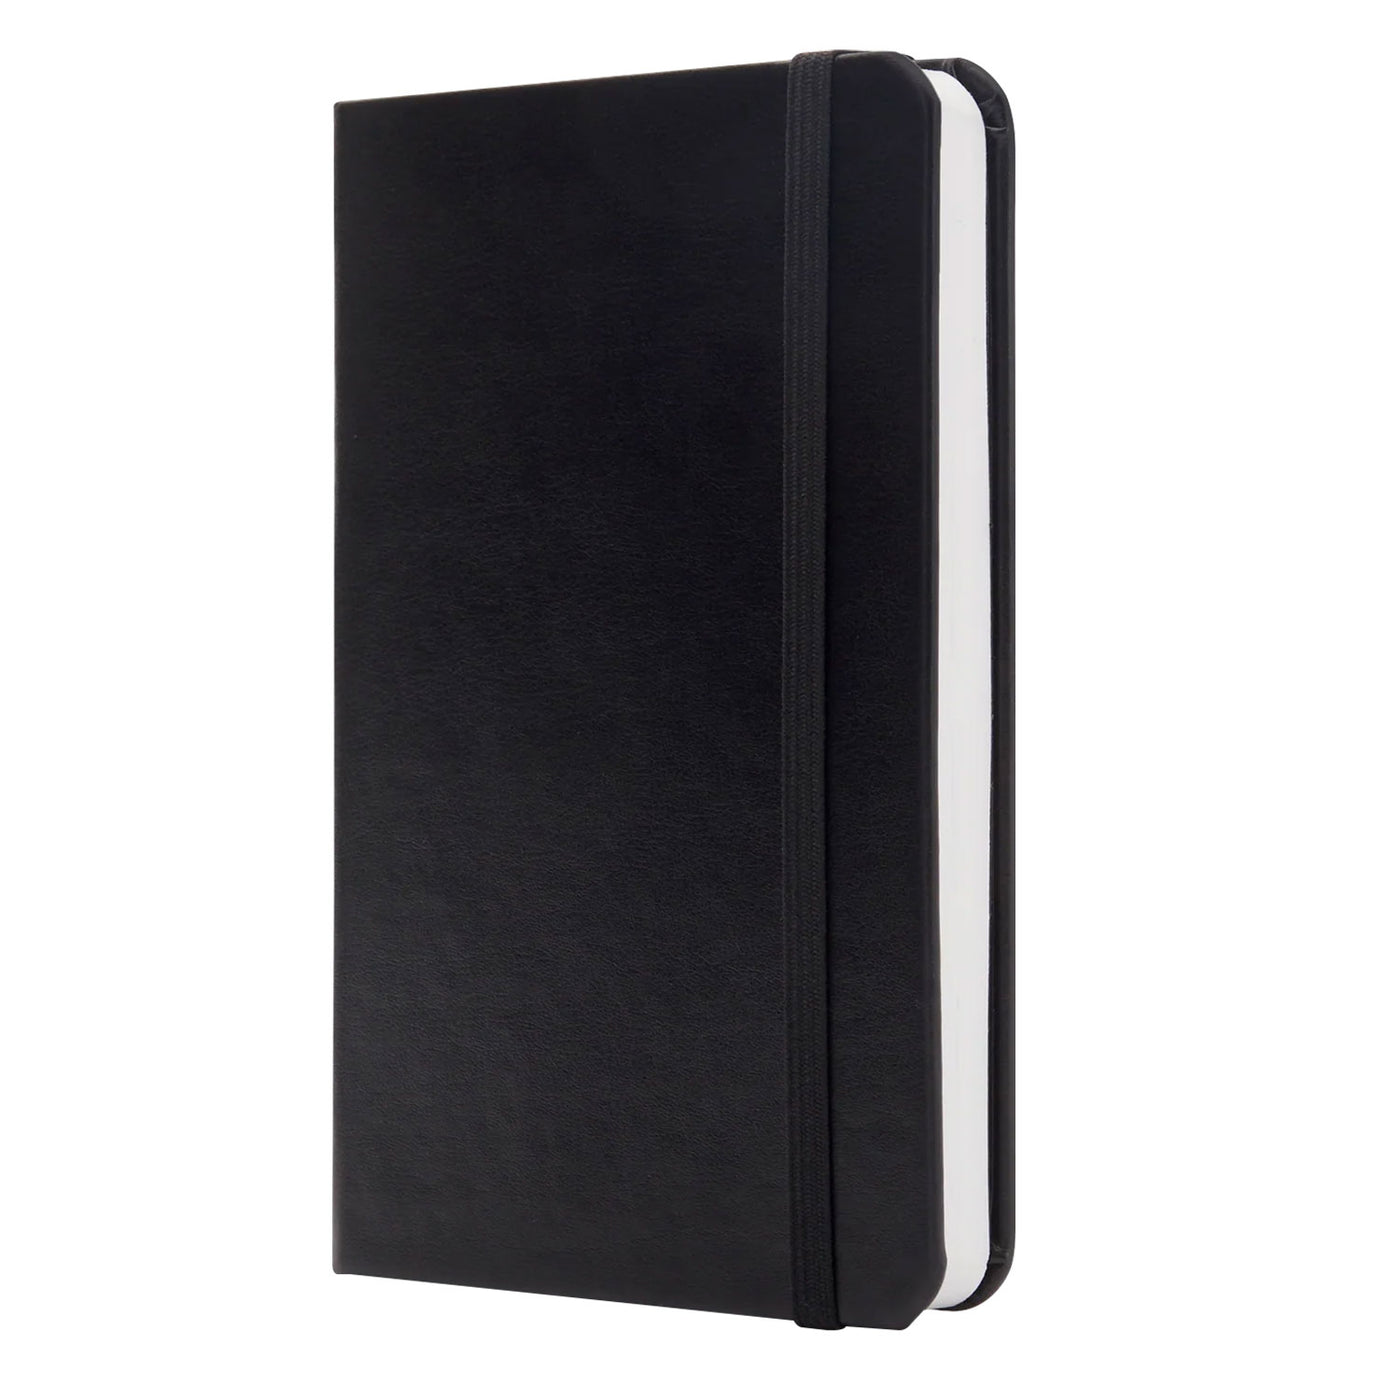 Sheaffer Gift Set - VFM Matte Black Ball Pen with A6 Black Notebook